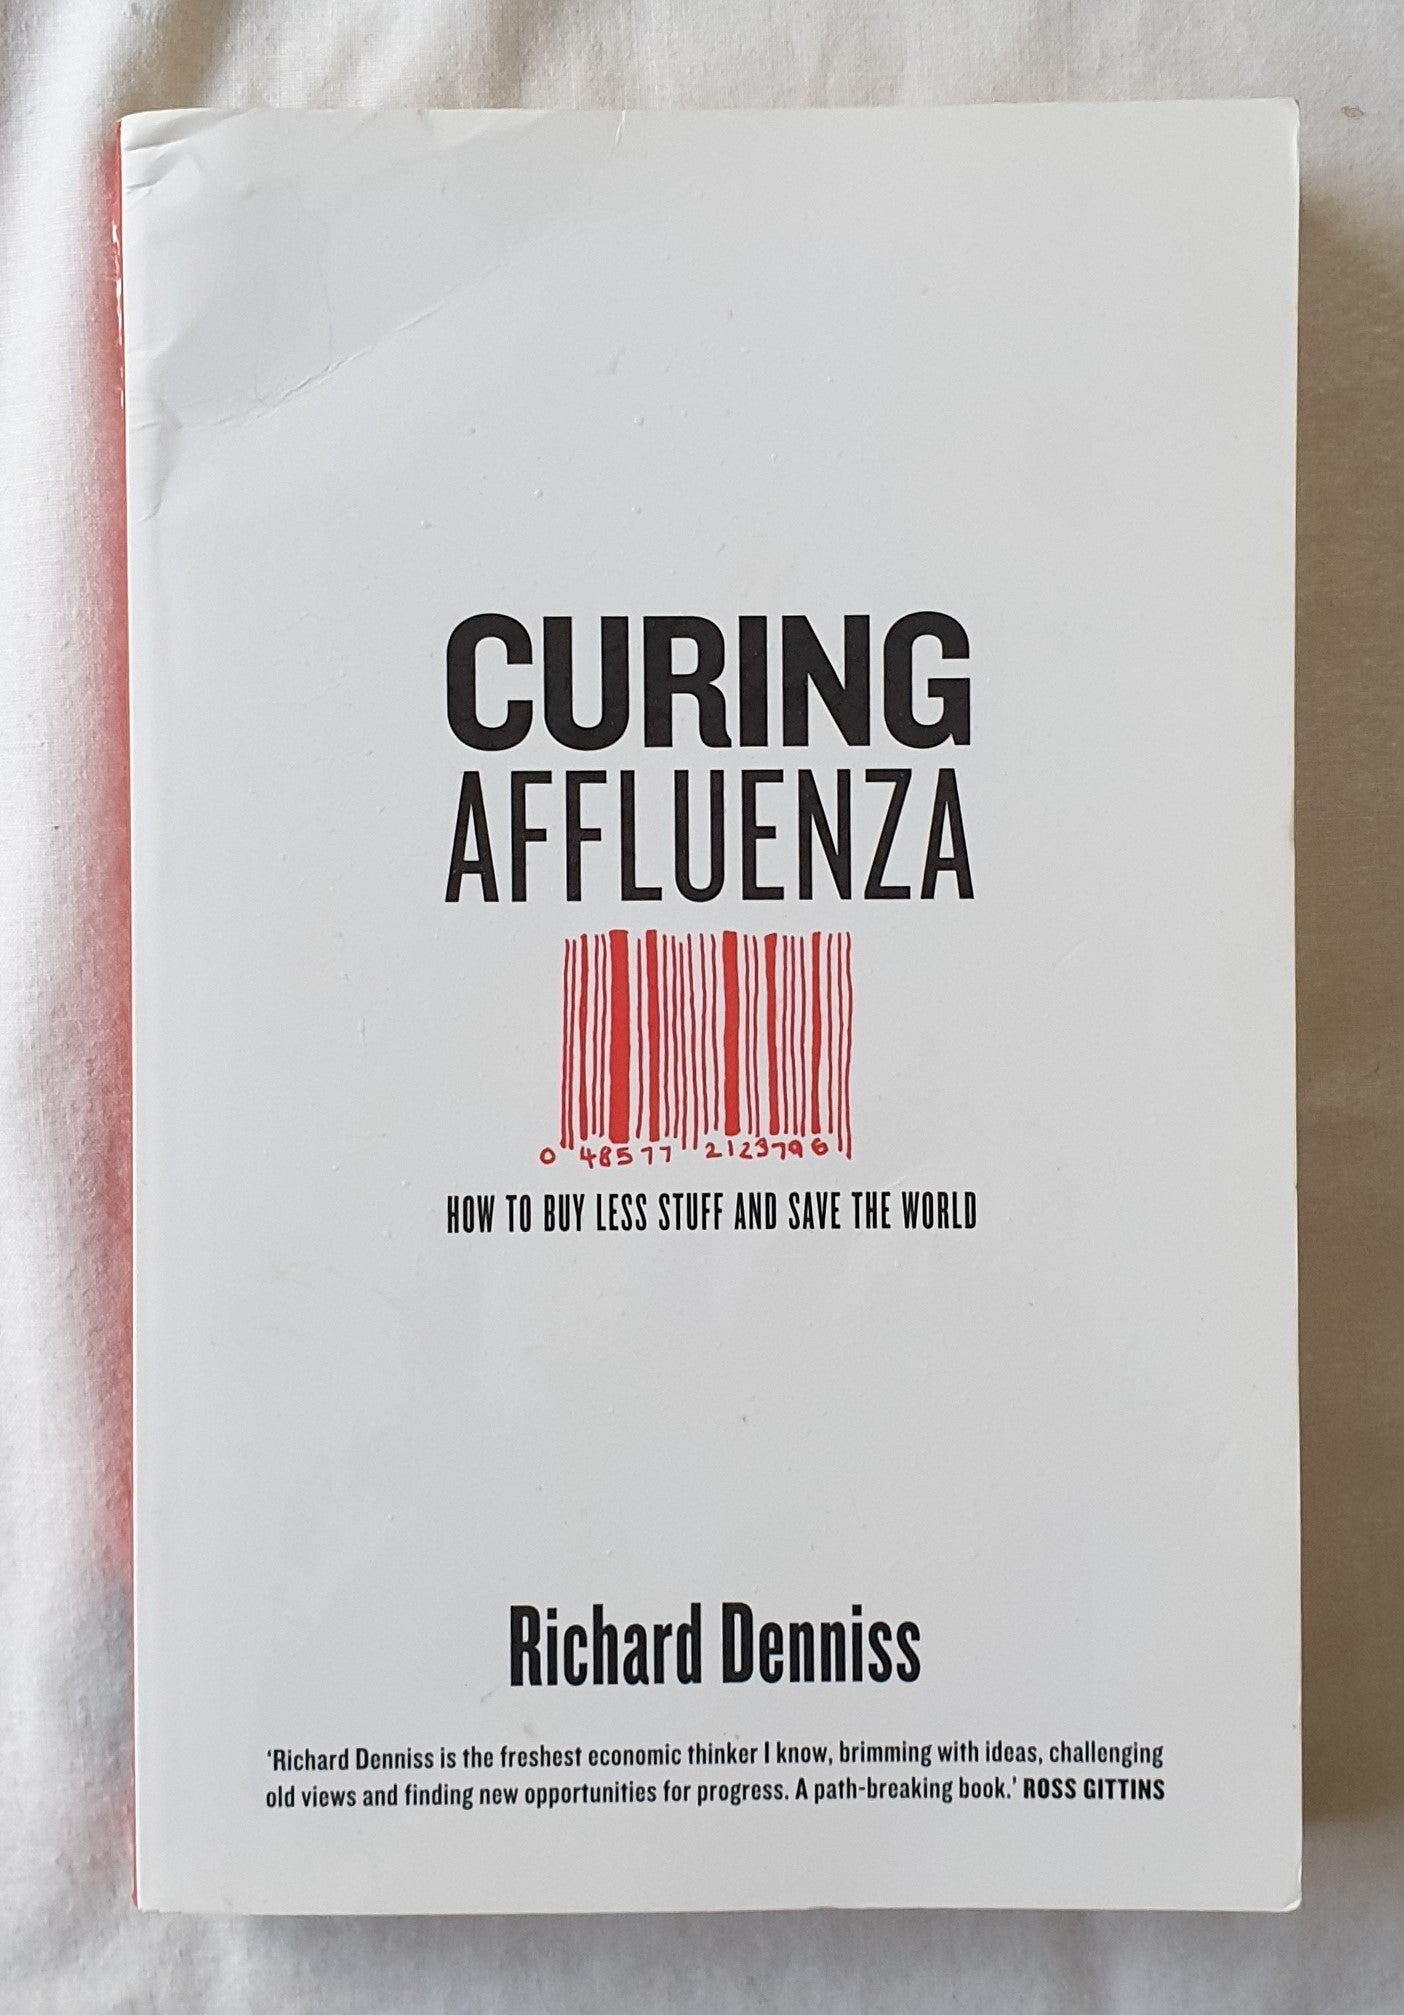 Curing Affluenza by Richard Denniss